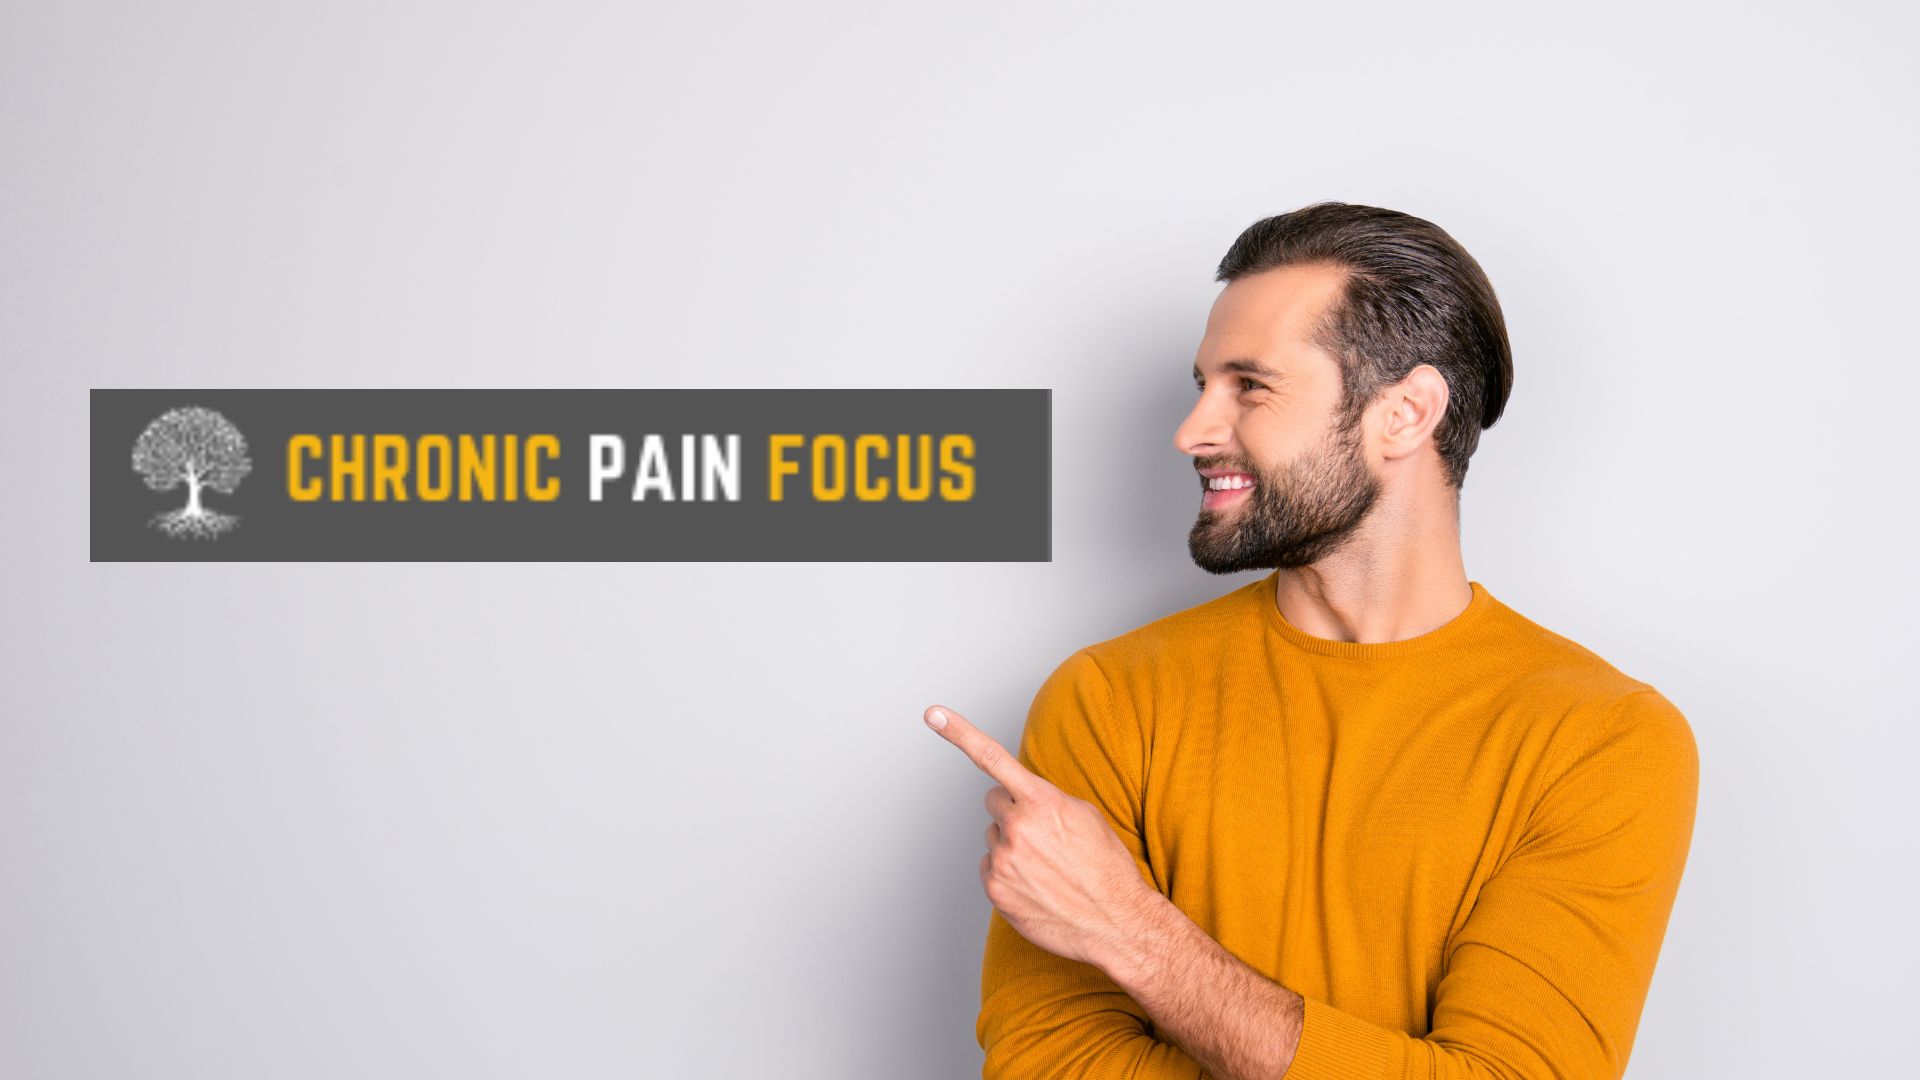 Contact Chronic Pain Focus